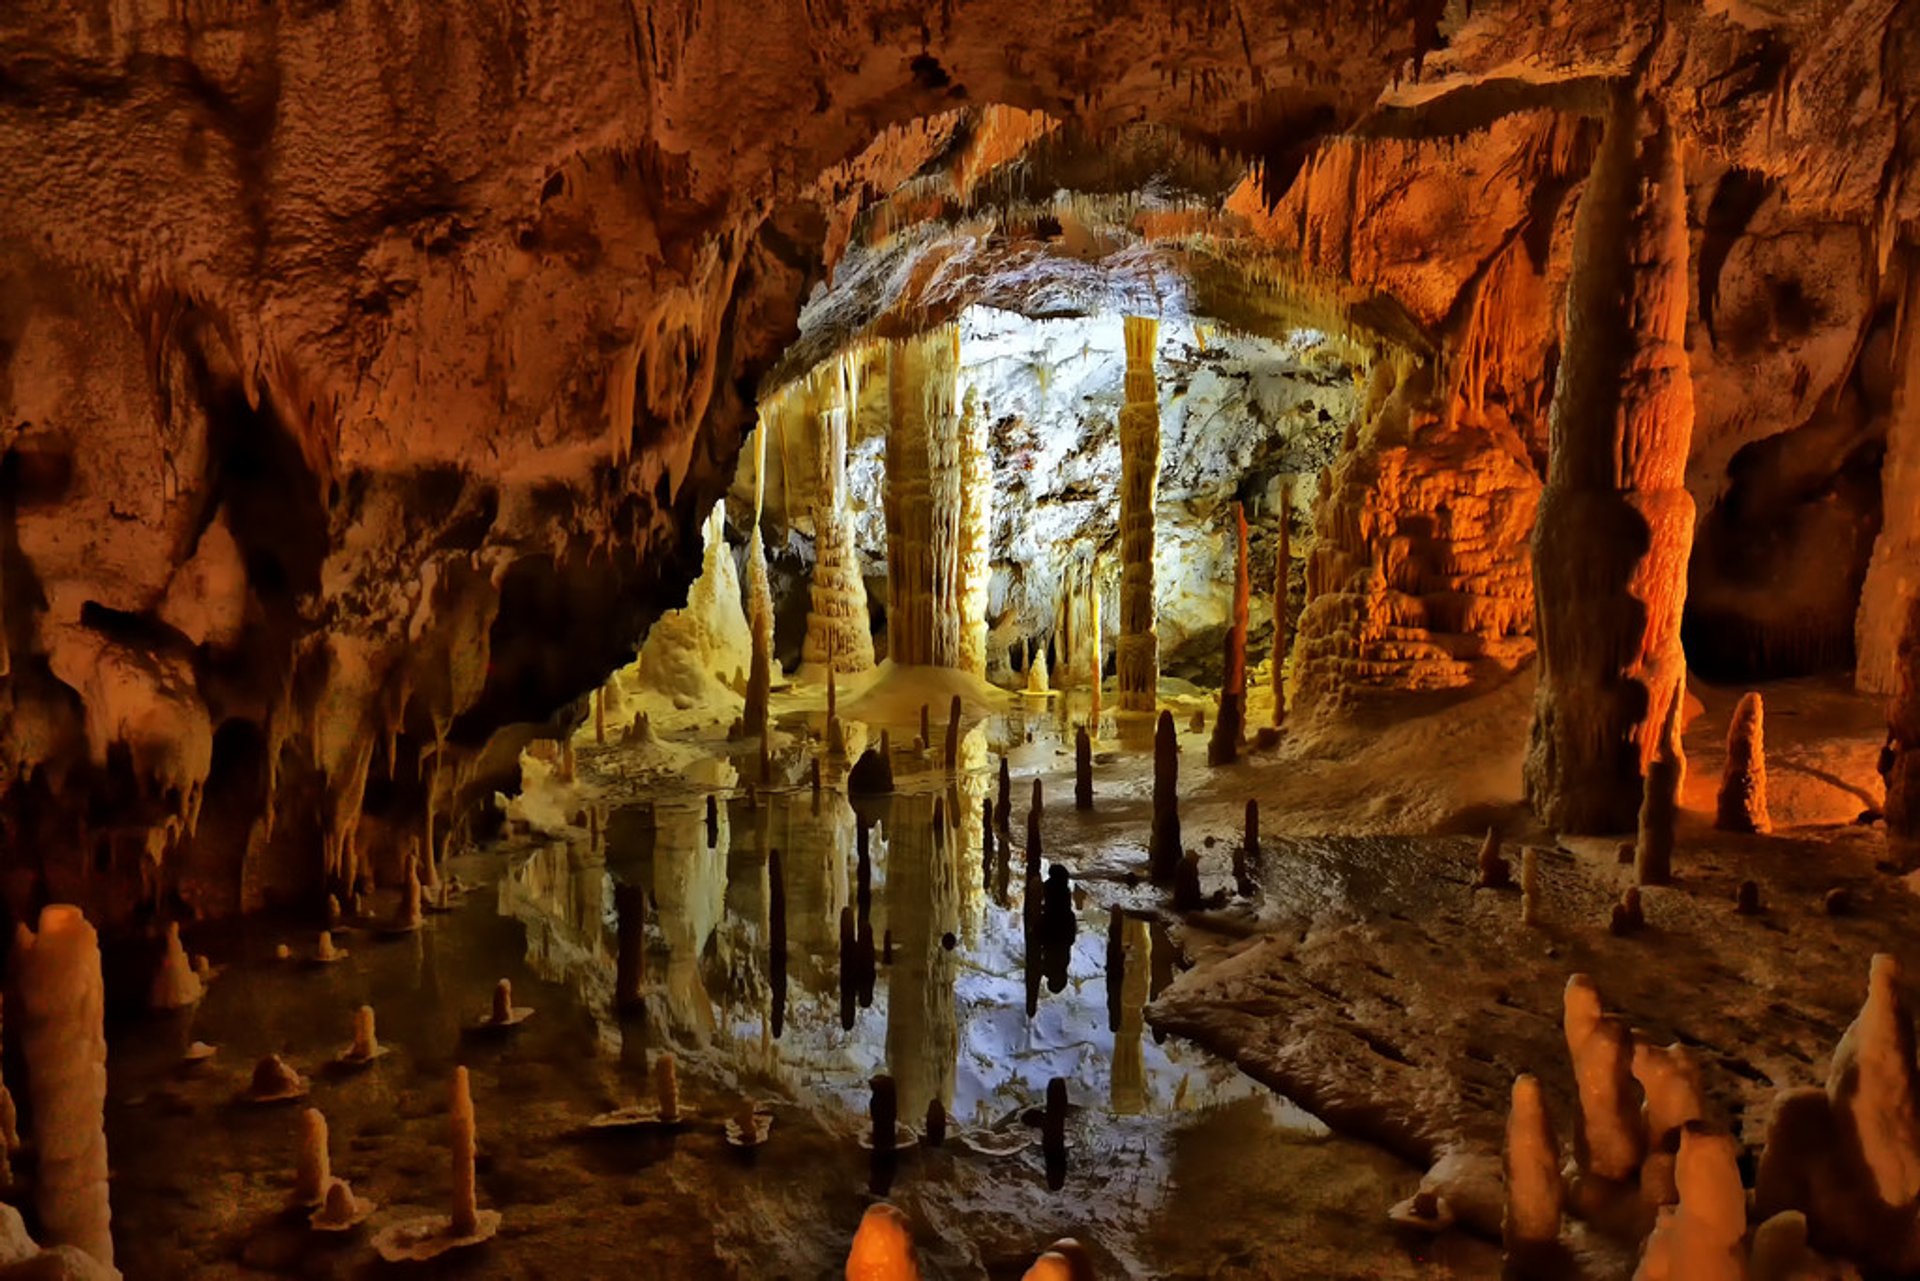 Cavernas de Frasassi (Grotte di Frasassi), Genga